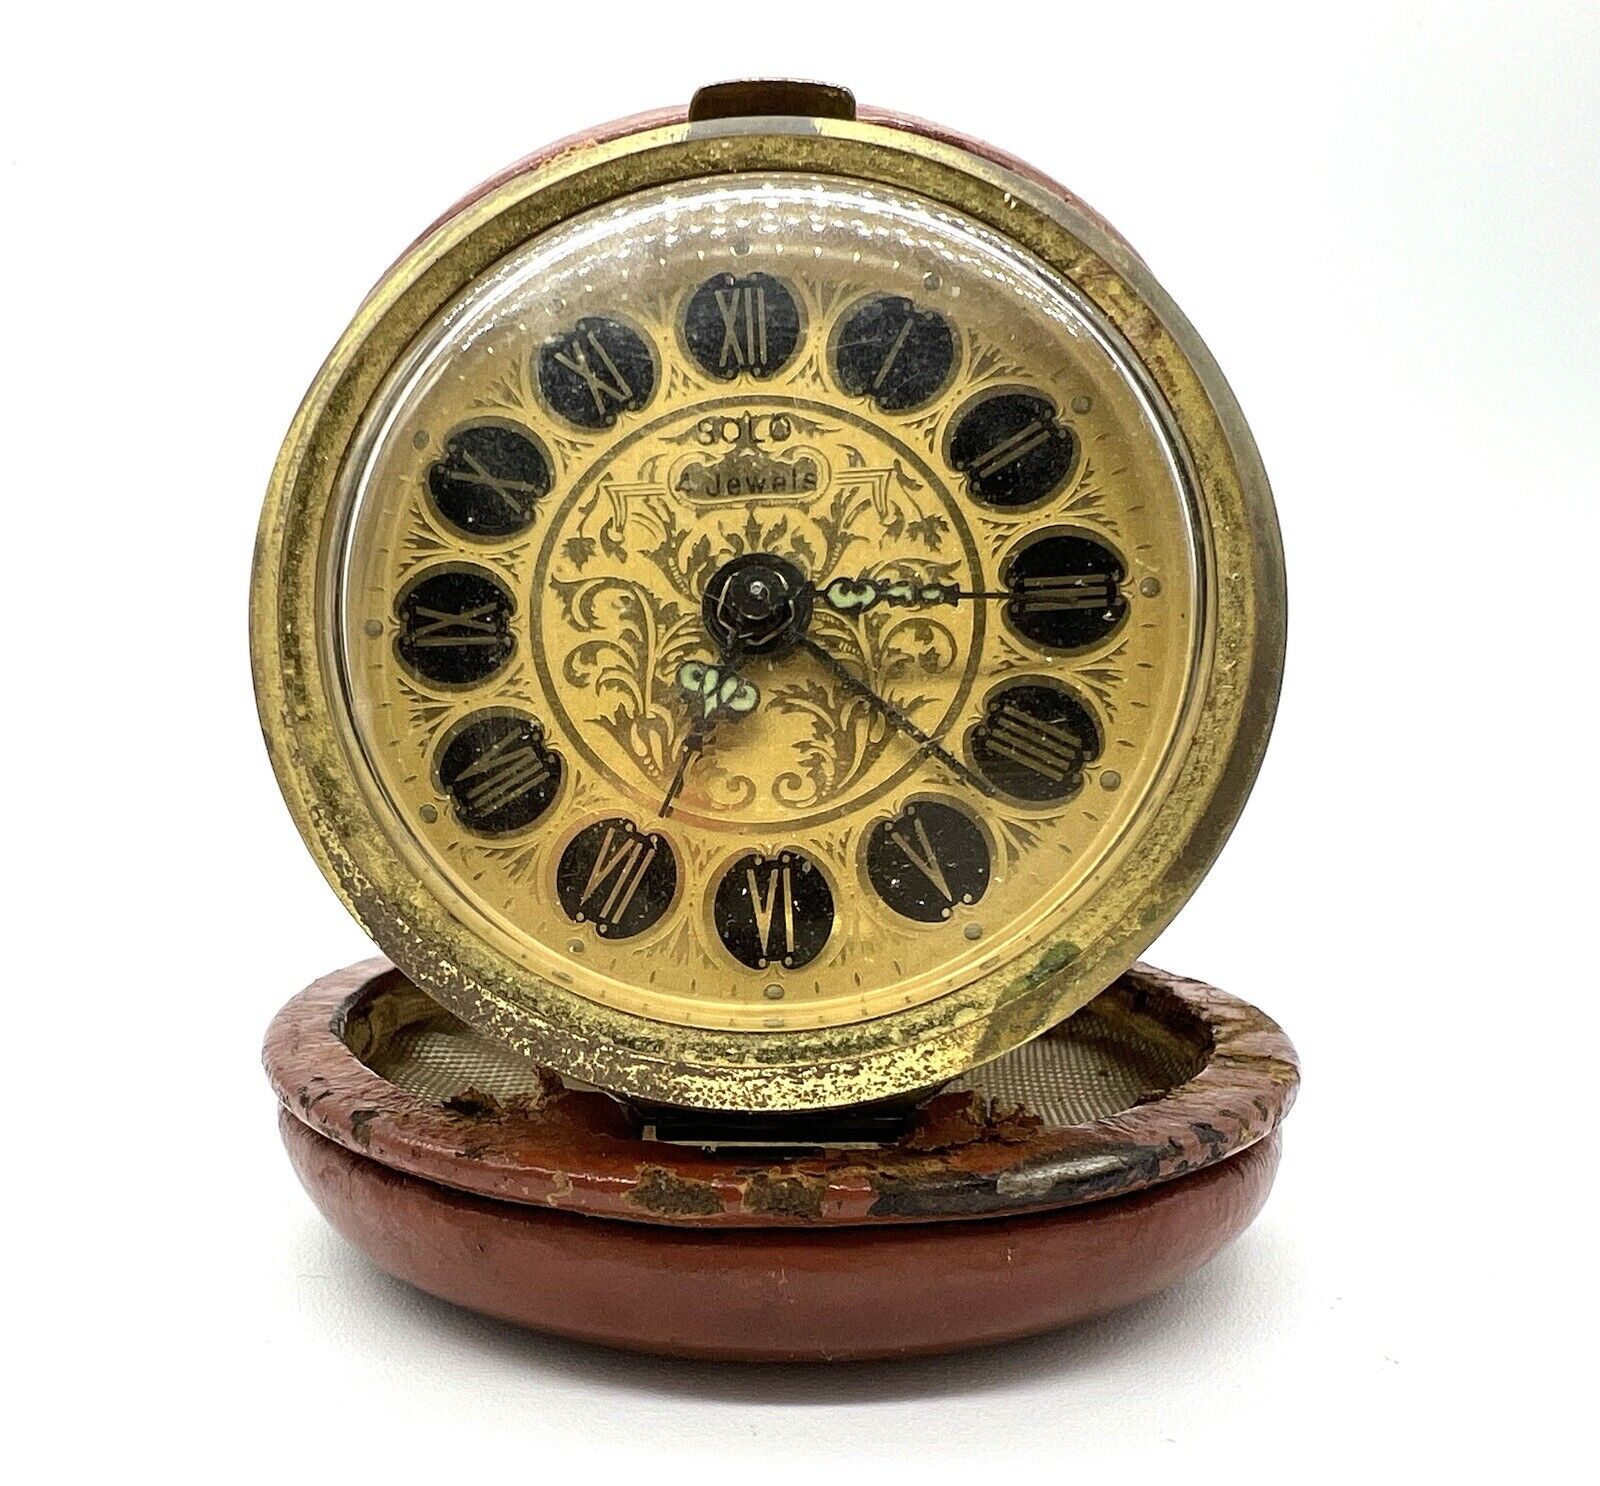 Solo 4 Jewels Portable Antique Travel Alarm Clock